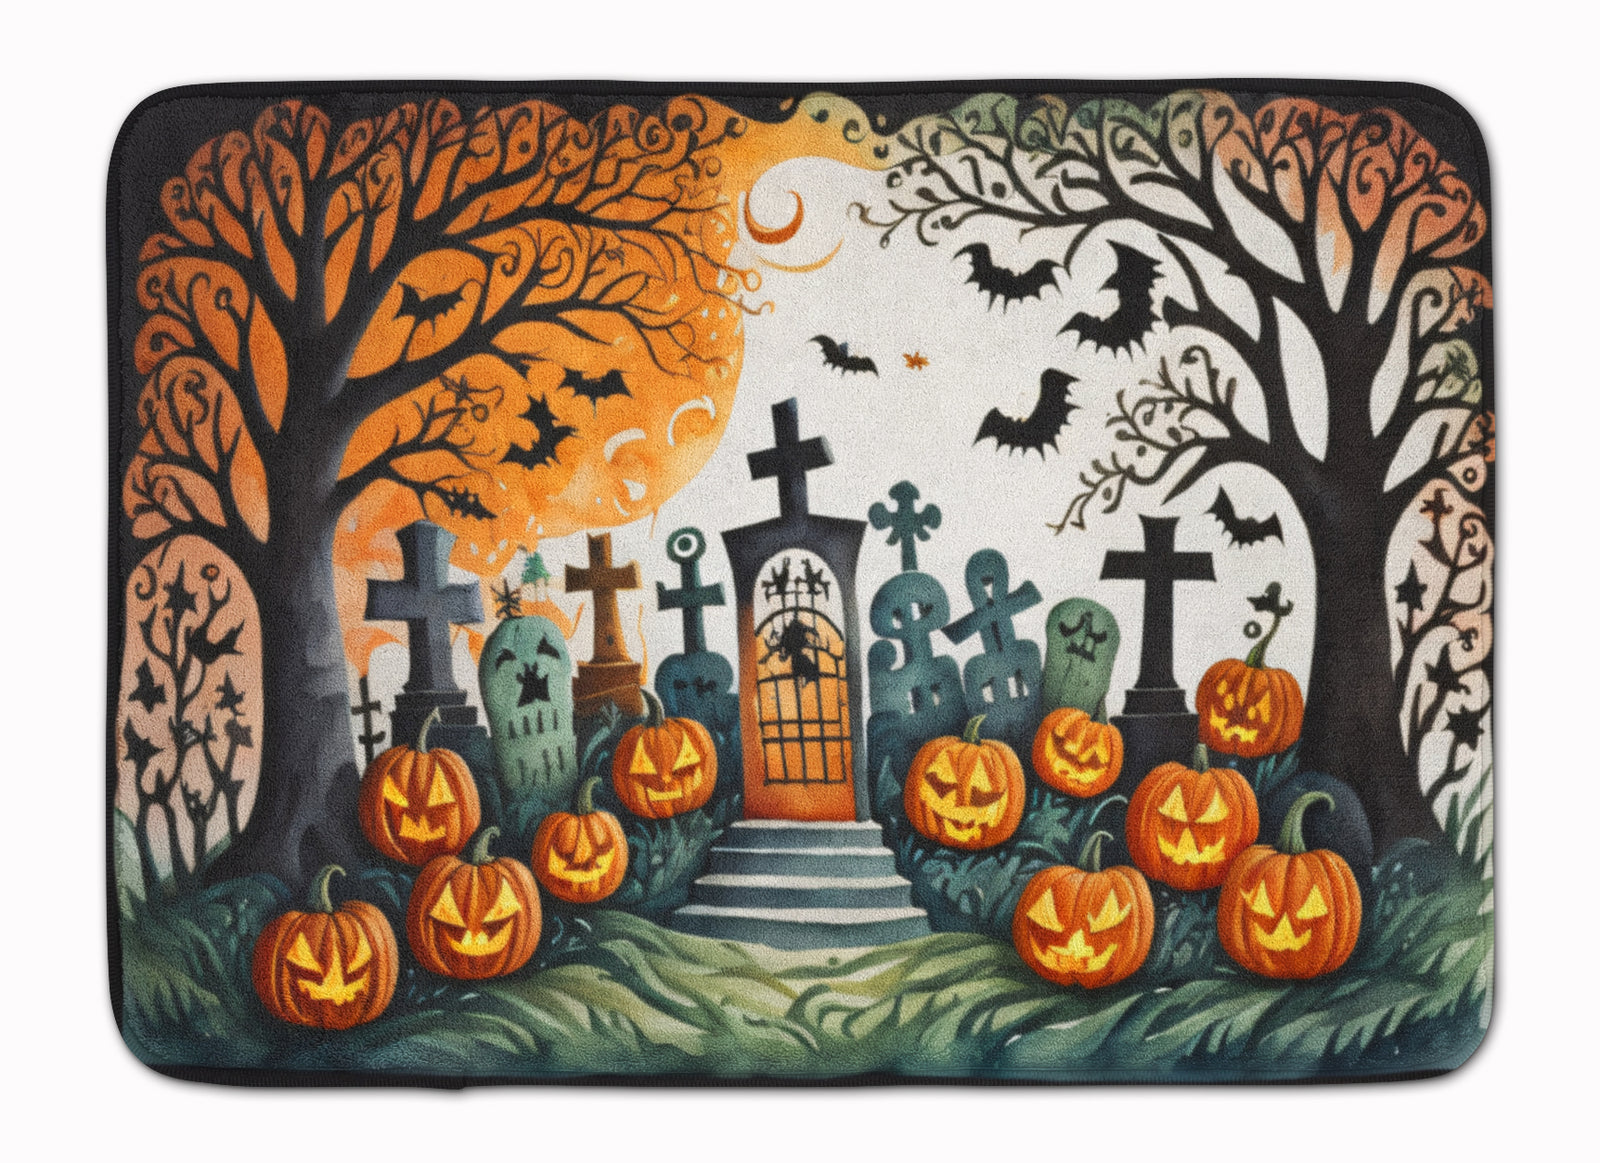 Buy this Papel Picado Skeletons Spooky Halloween Memory Foam Kitchen Mat